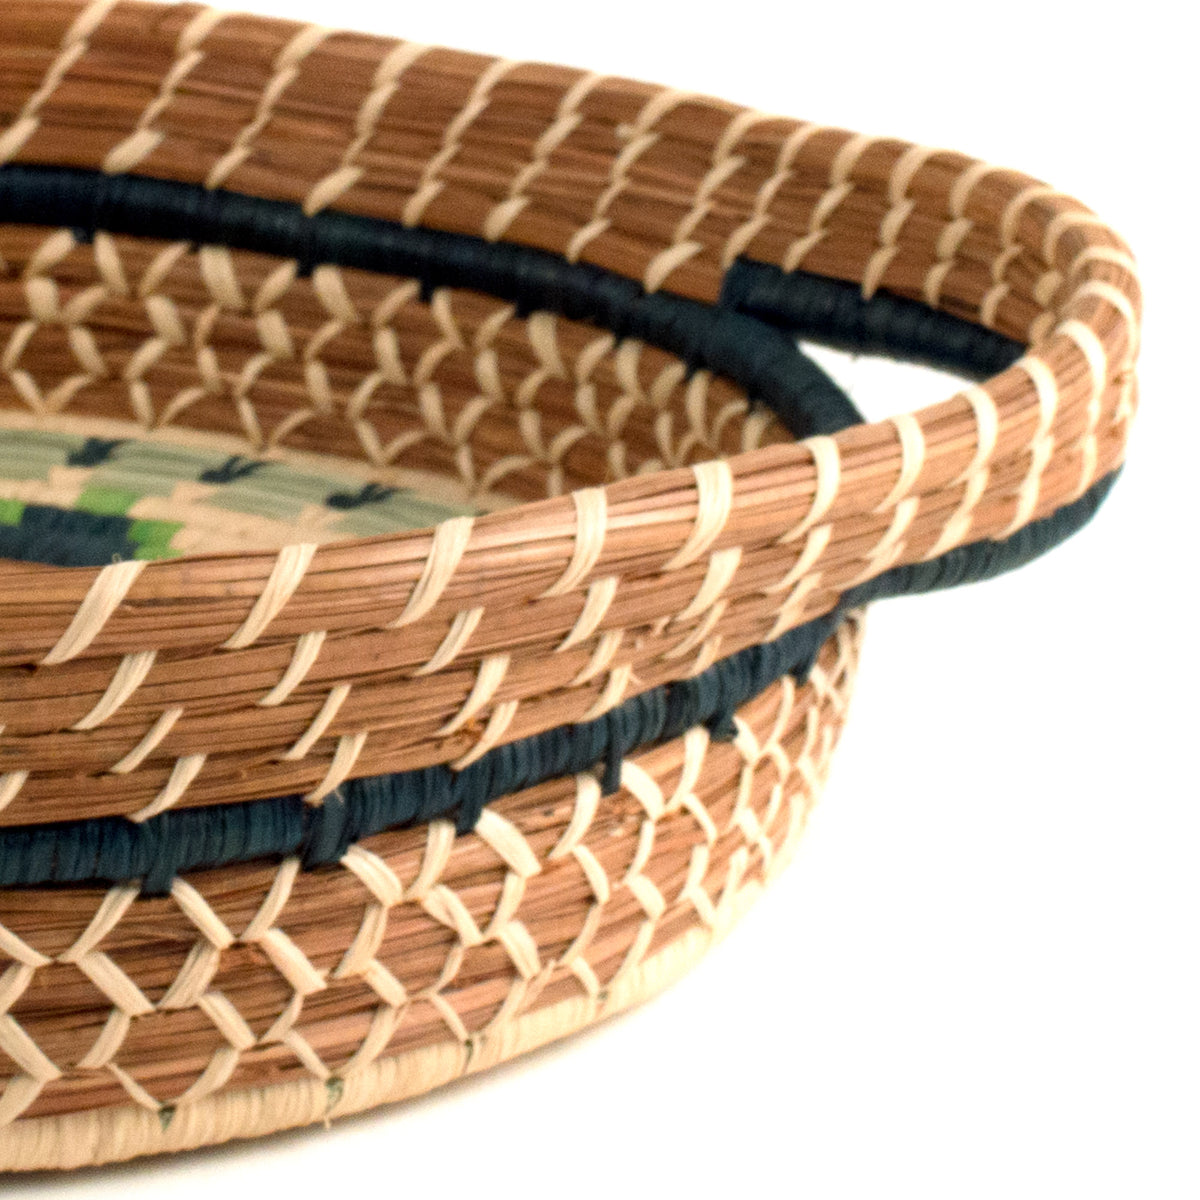 guatemalan pine needle basket with handles